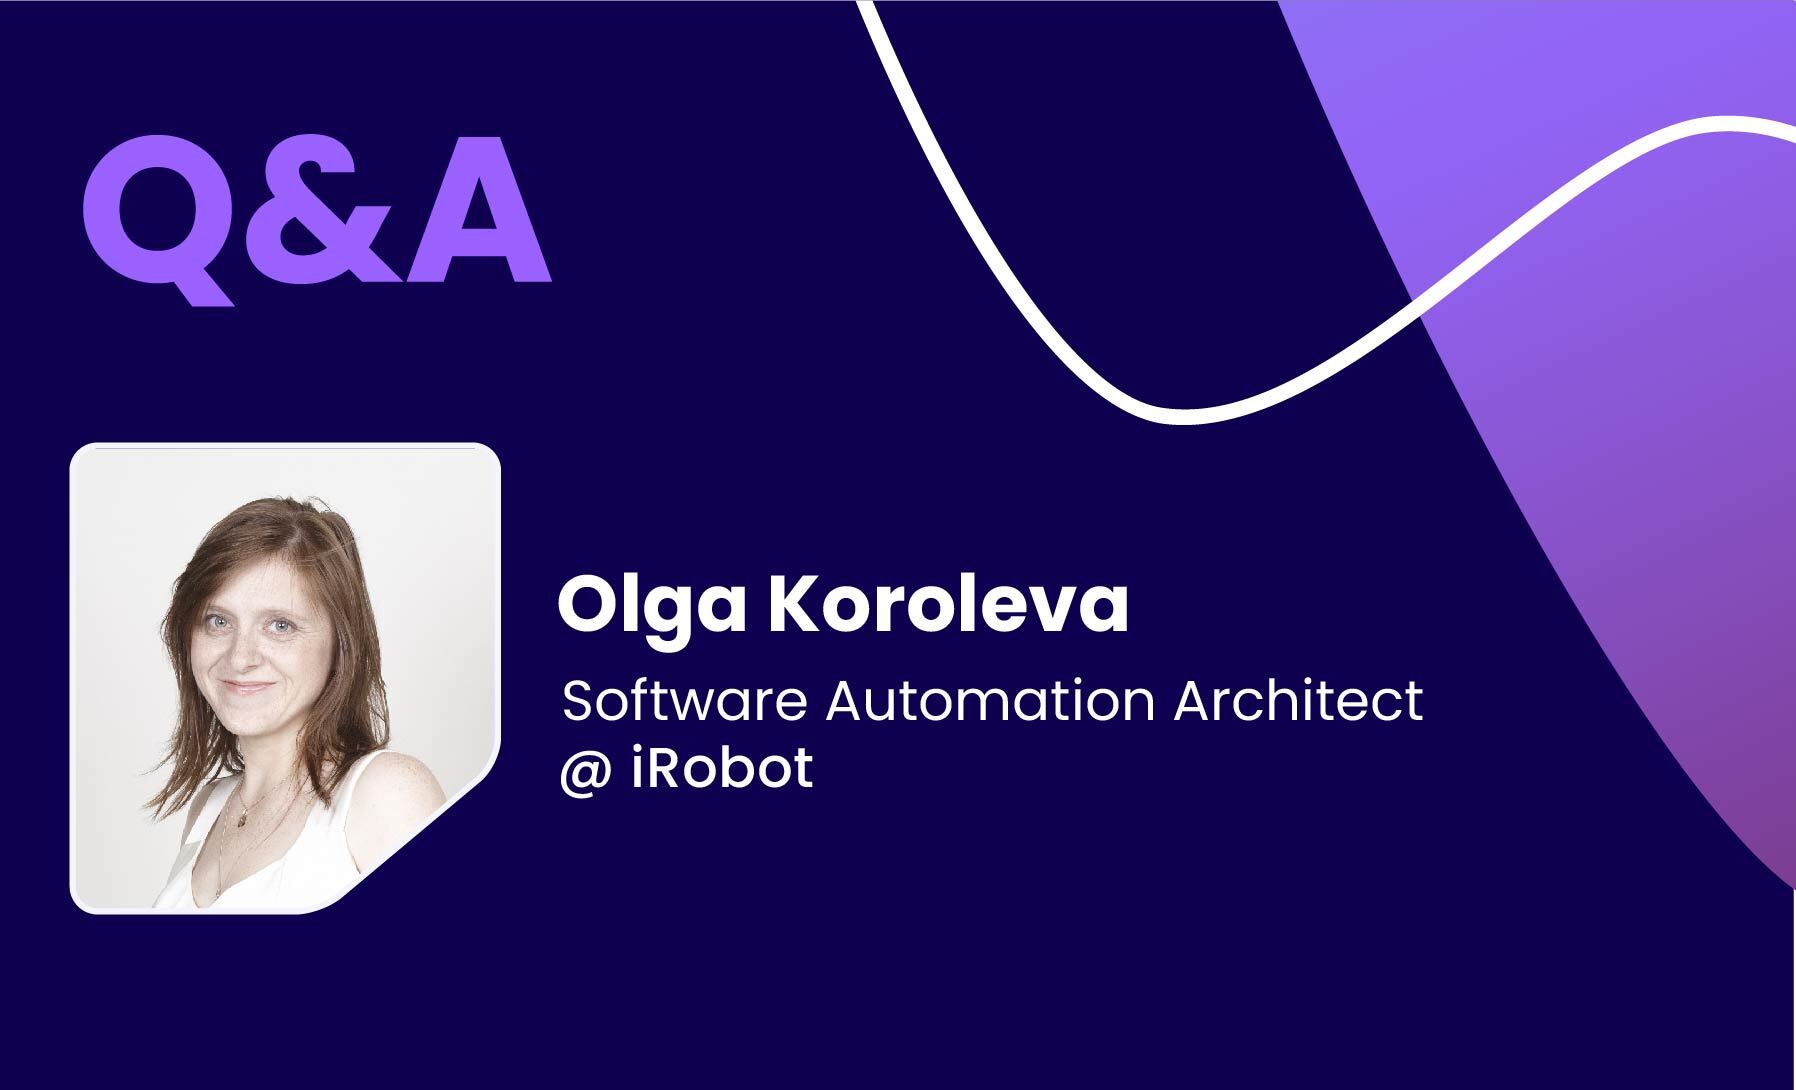 Q&A With Olga Koroleva, Software Automation Architect @ iRobot